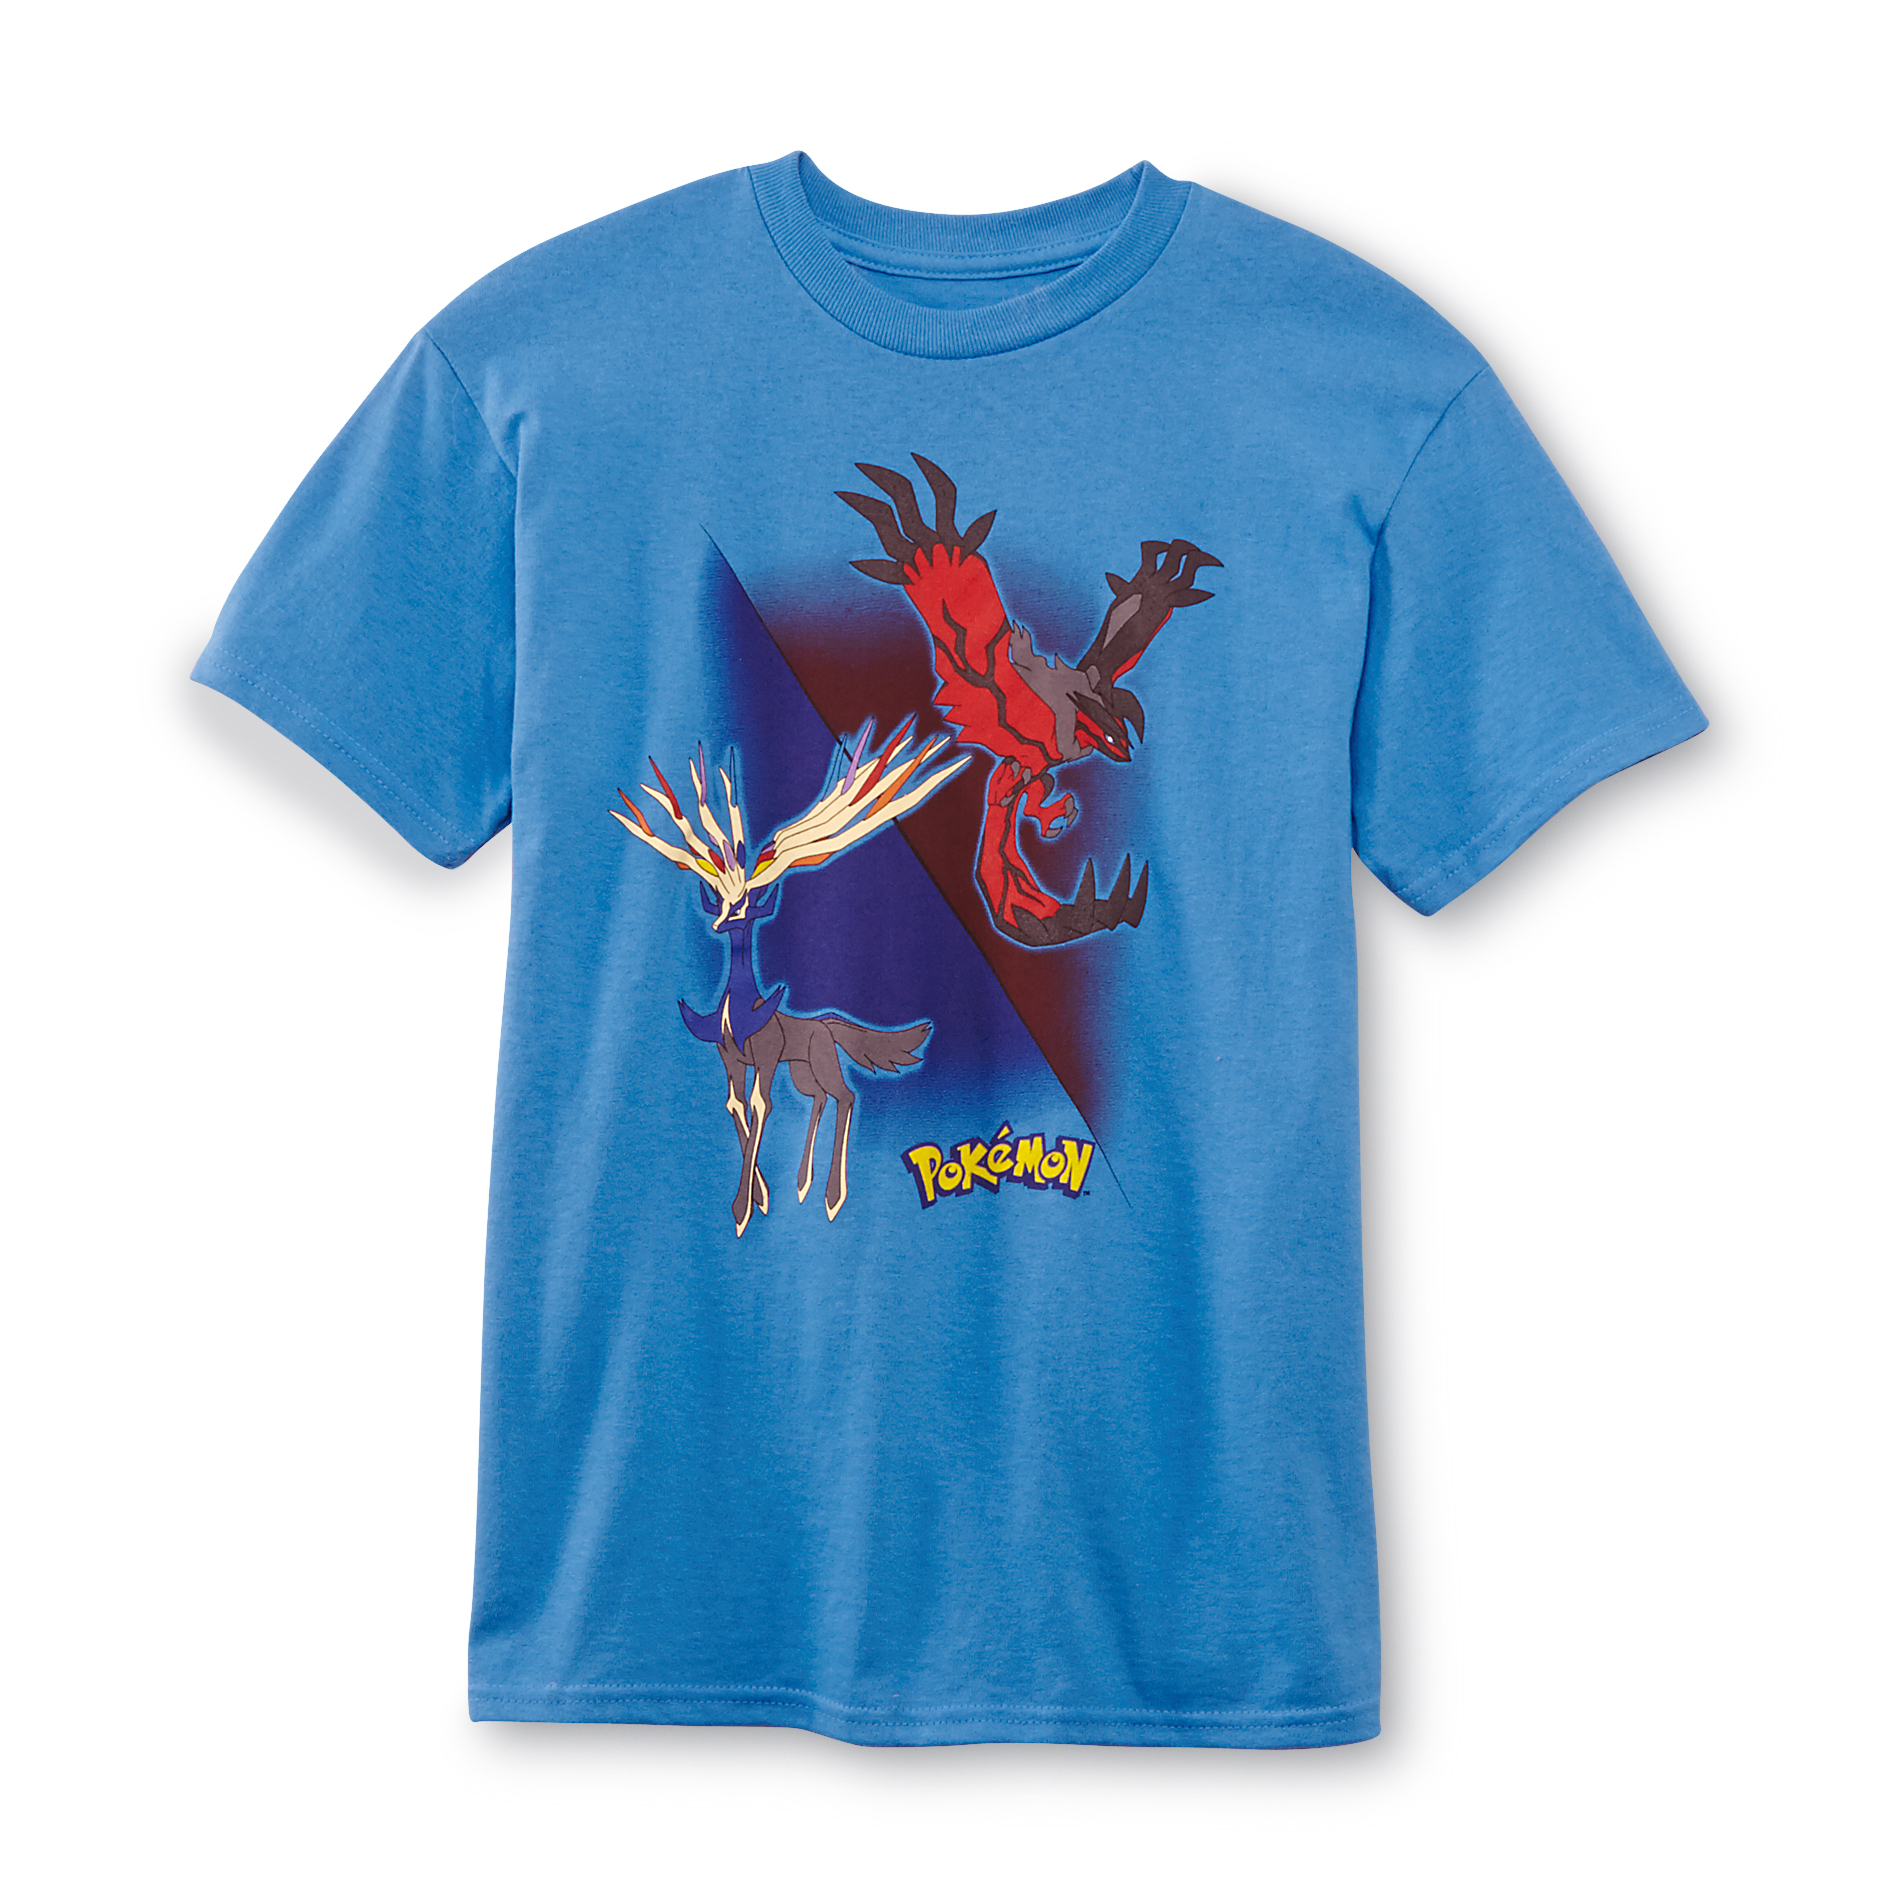 Nintendo Pokemon Boy's Graphic T-Shirt - Xerneas & Yveltal